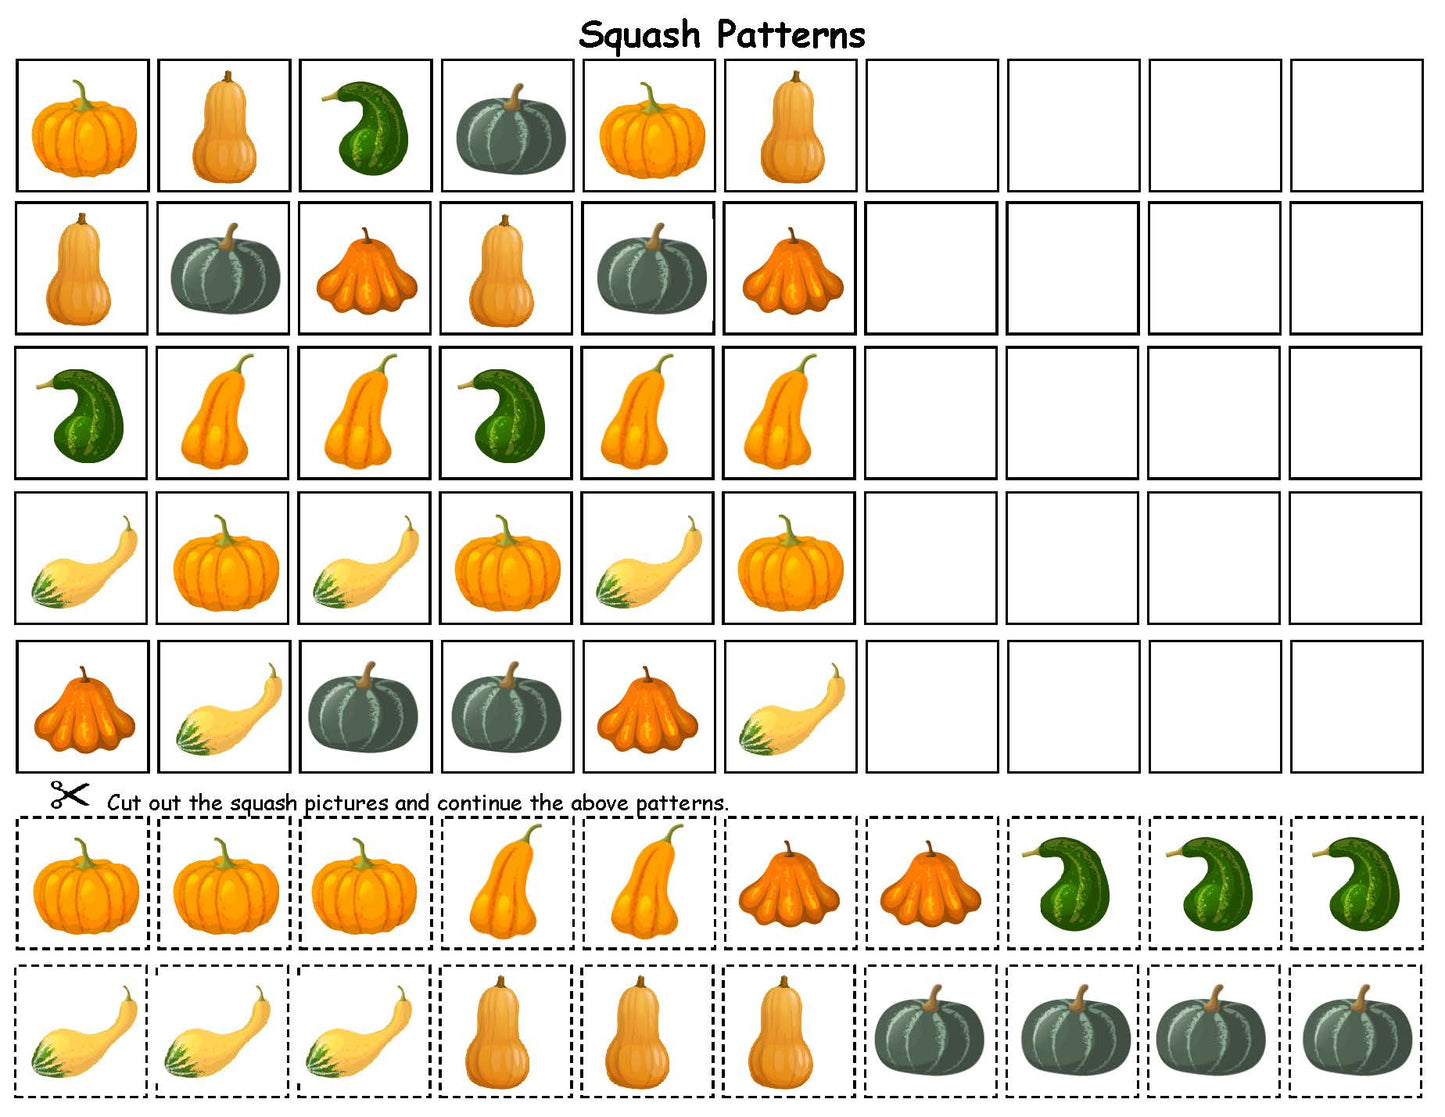 Squash Patterns